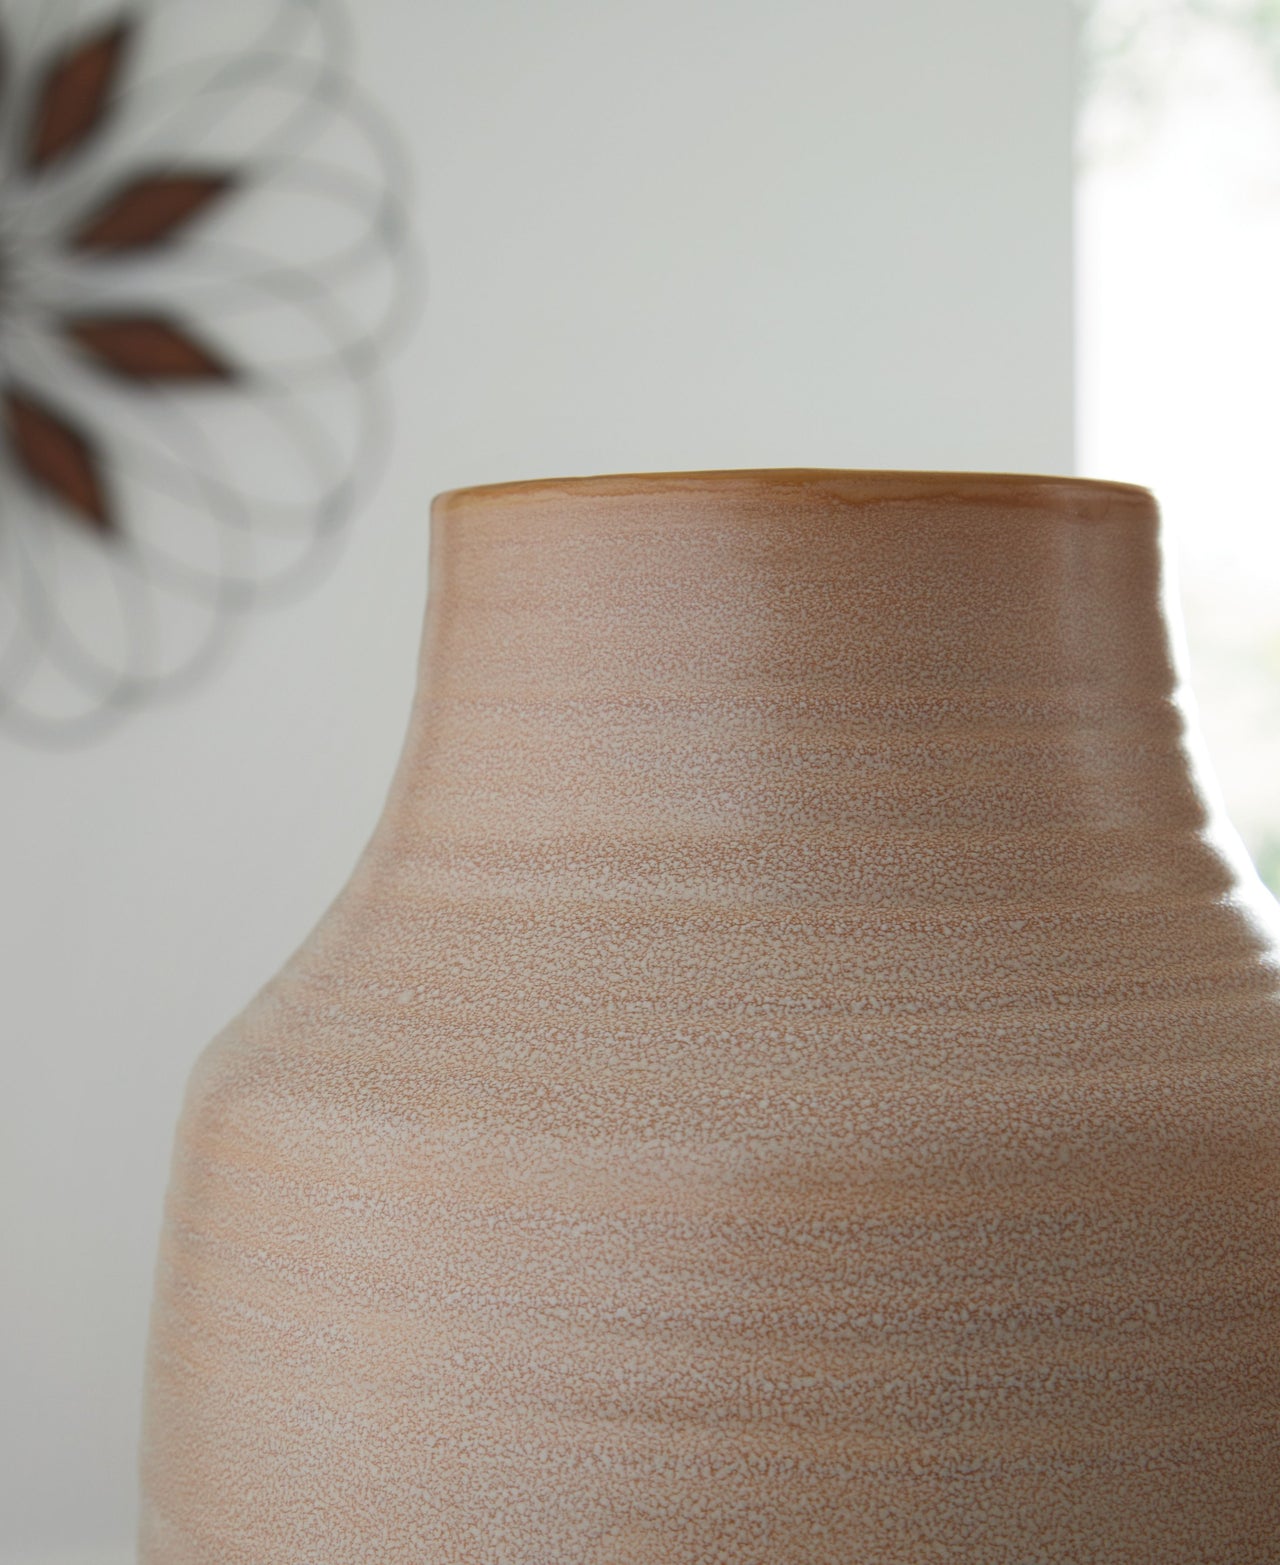 Millcott - Small Vase - Tony's Home Furnishings